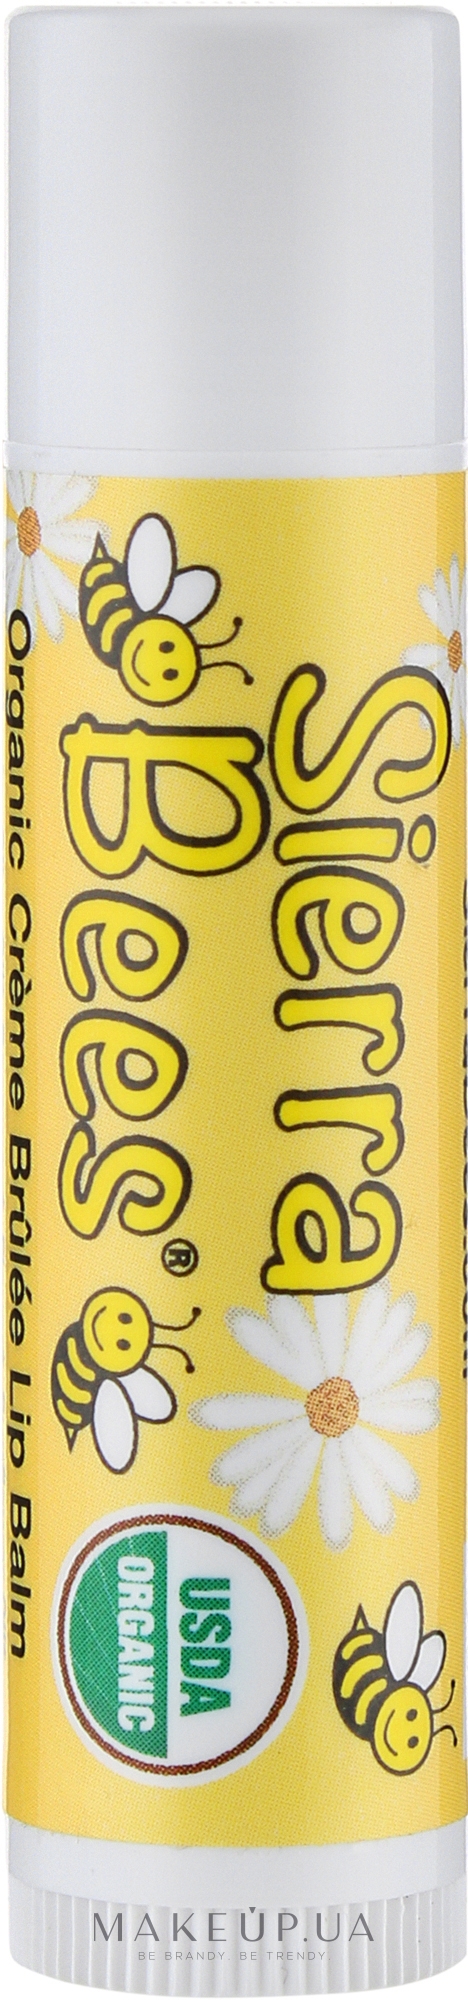 Бальзам для губ органічний "Крем-брюле" - Sierra Bees Creme Brulee Organic Lip Balm — фото 4.25g